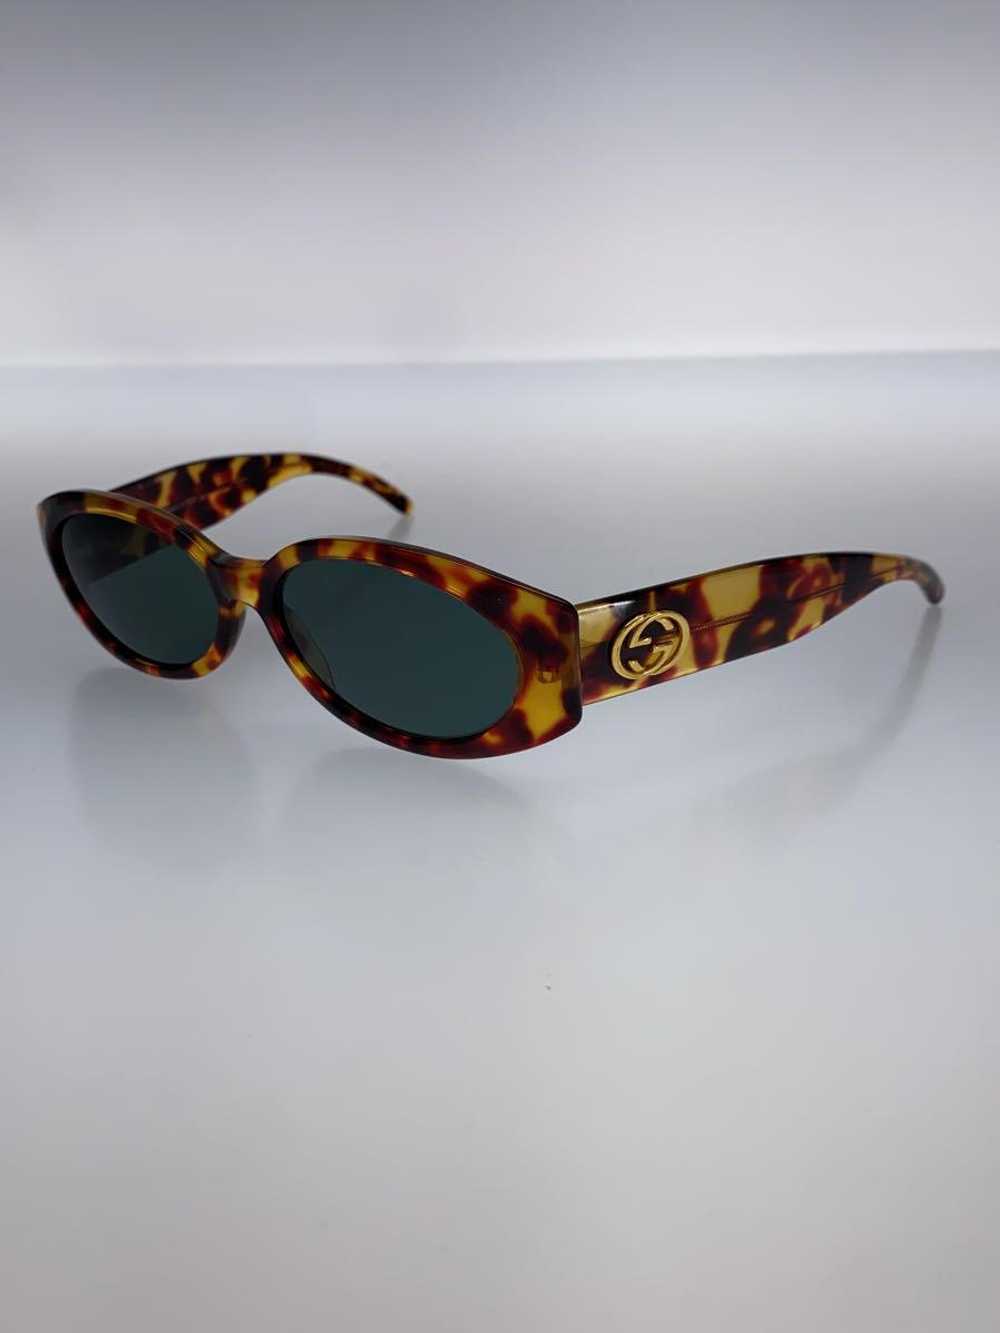 Gucci Sunglasses Wellington Celluloid 2196 S - image 2